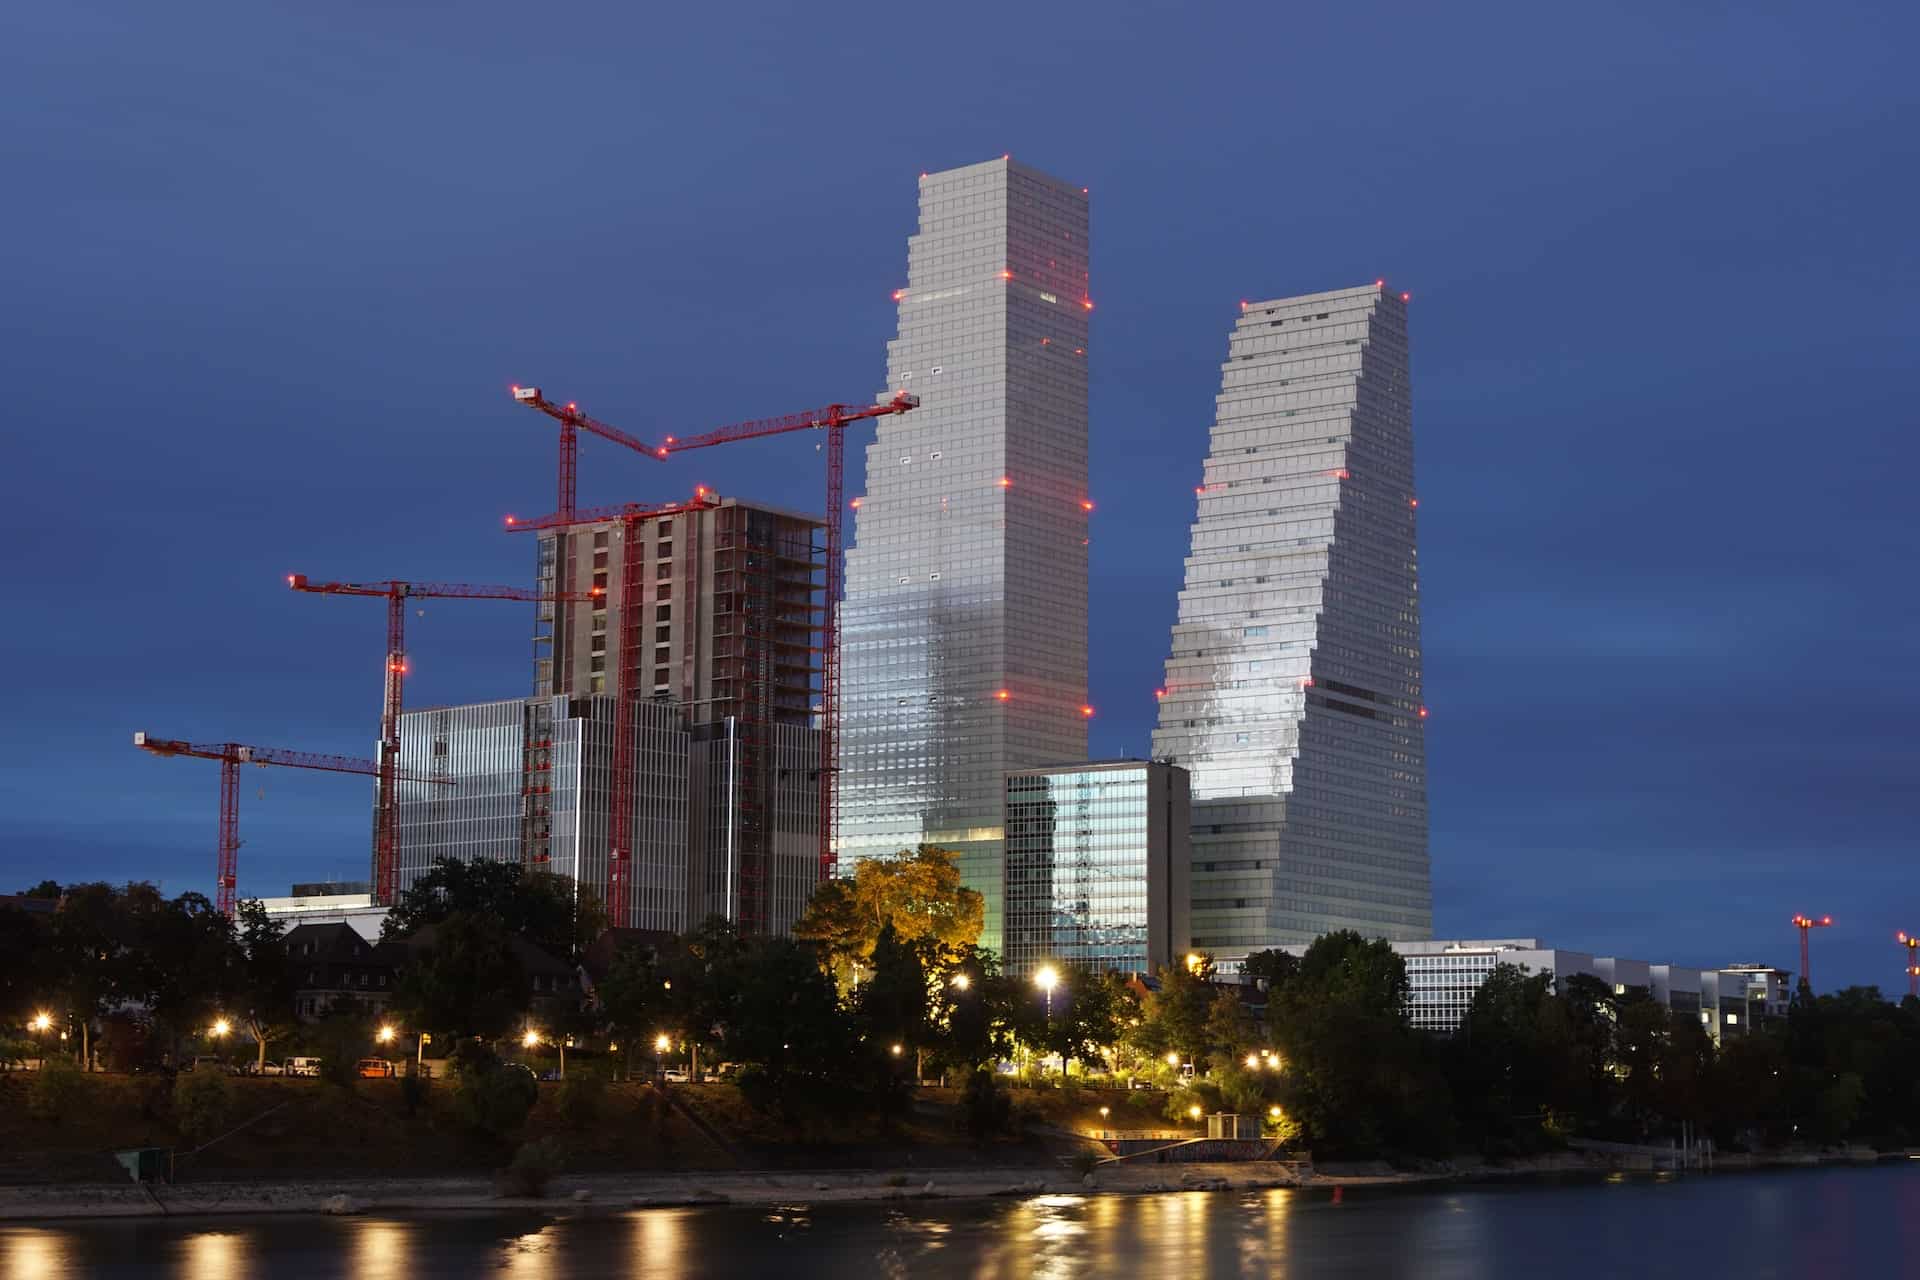 Best things to do in Basel Switzerland - Matt Richter - Roche Towers by Walter Brunner on Unsplash